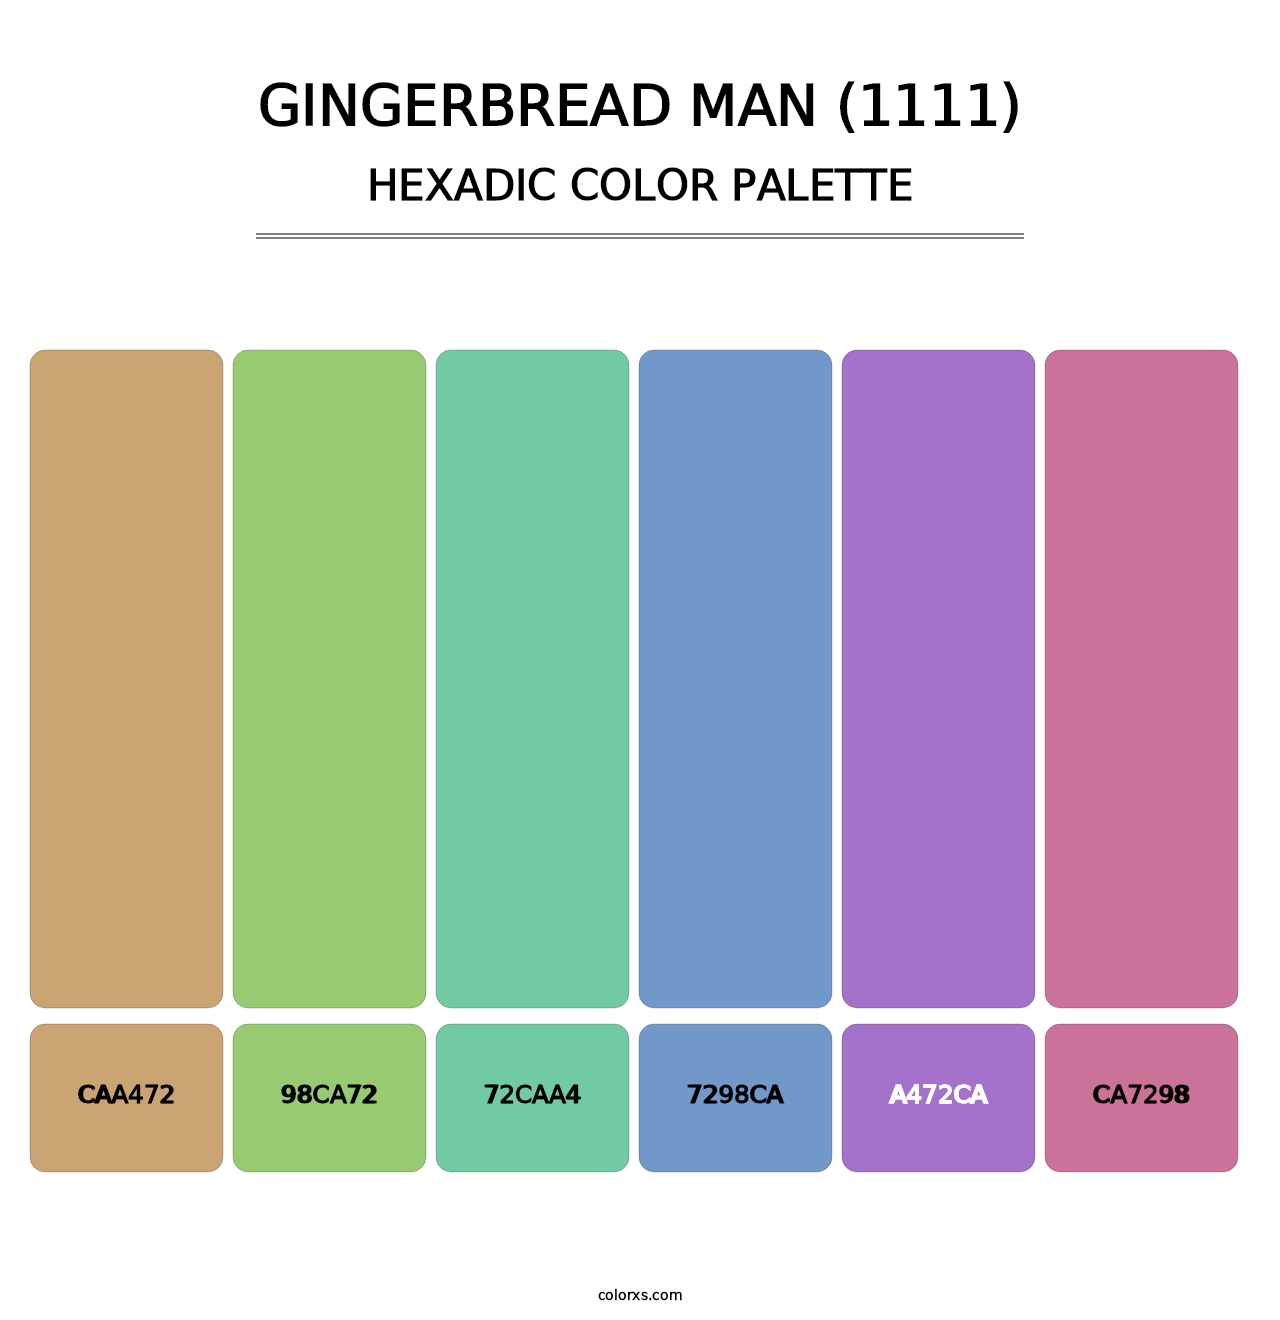 Gingerbread Man (1111) - Hexadic Color Palette